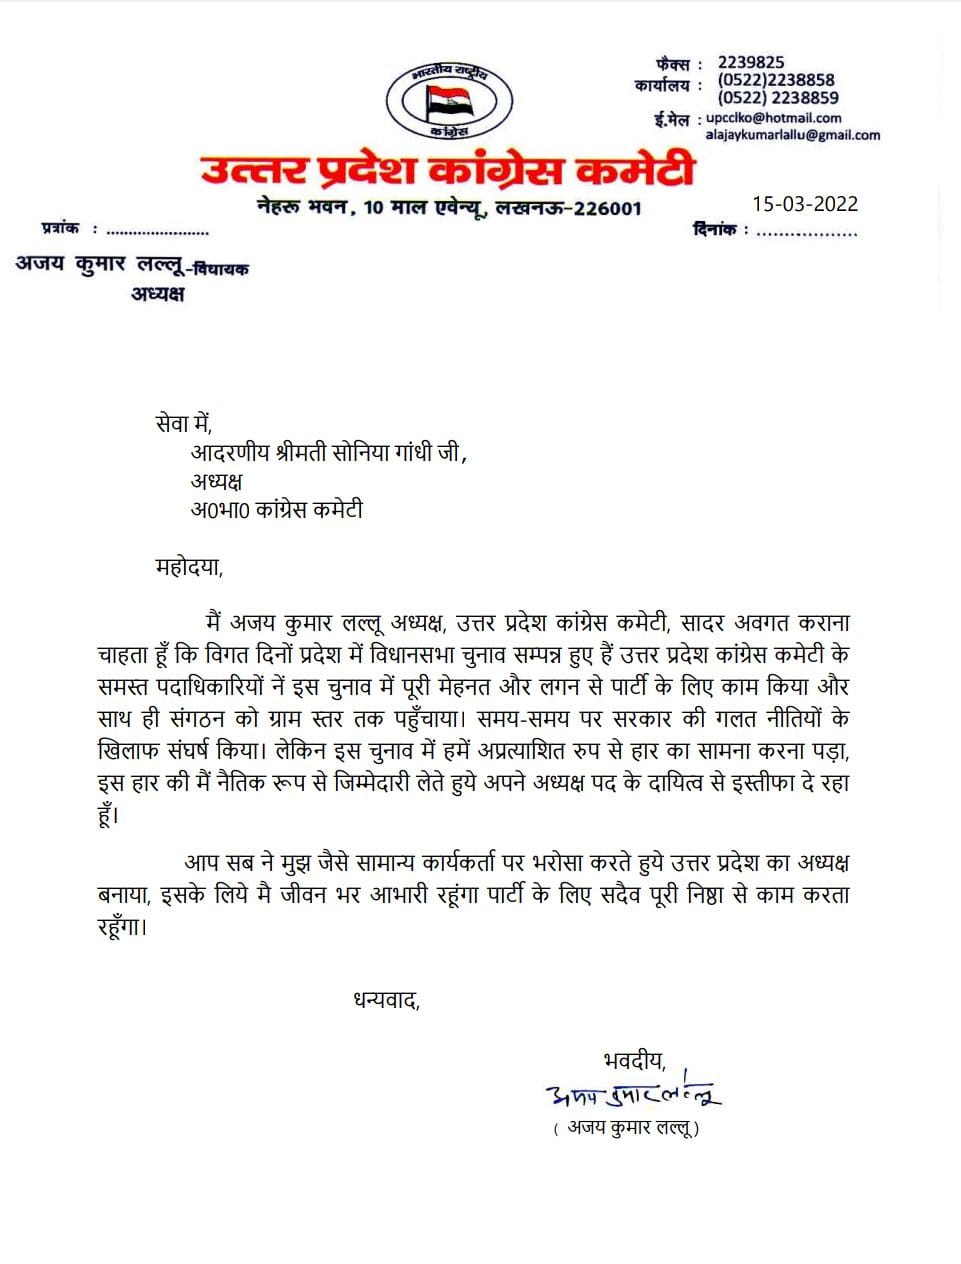 Ajay Kumar Lallu tendered his resignation